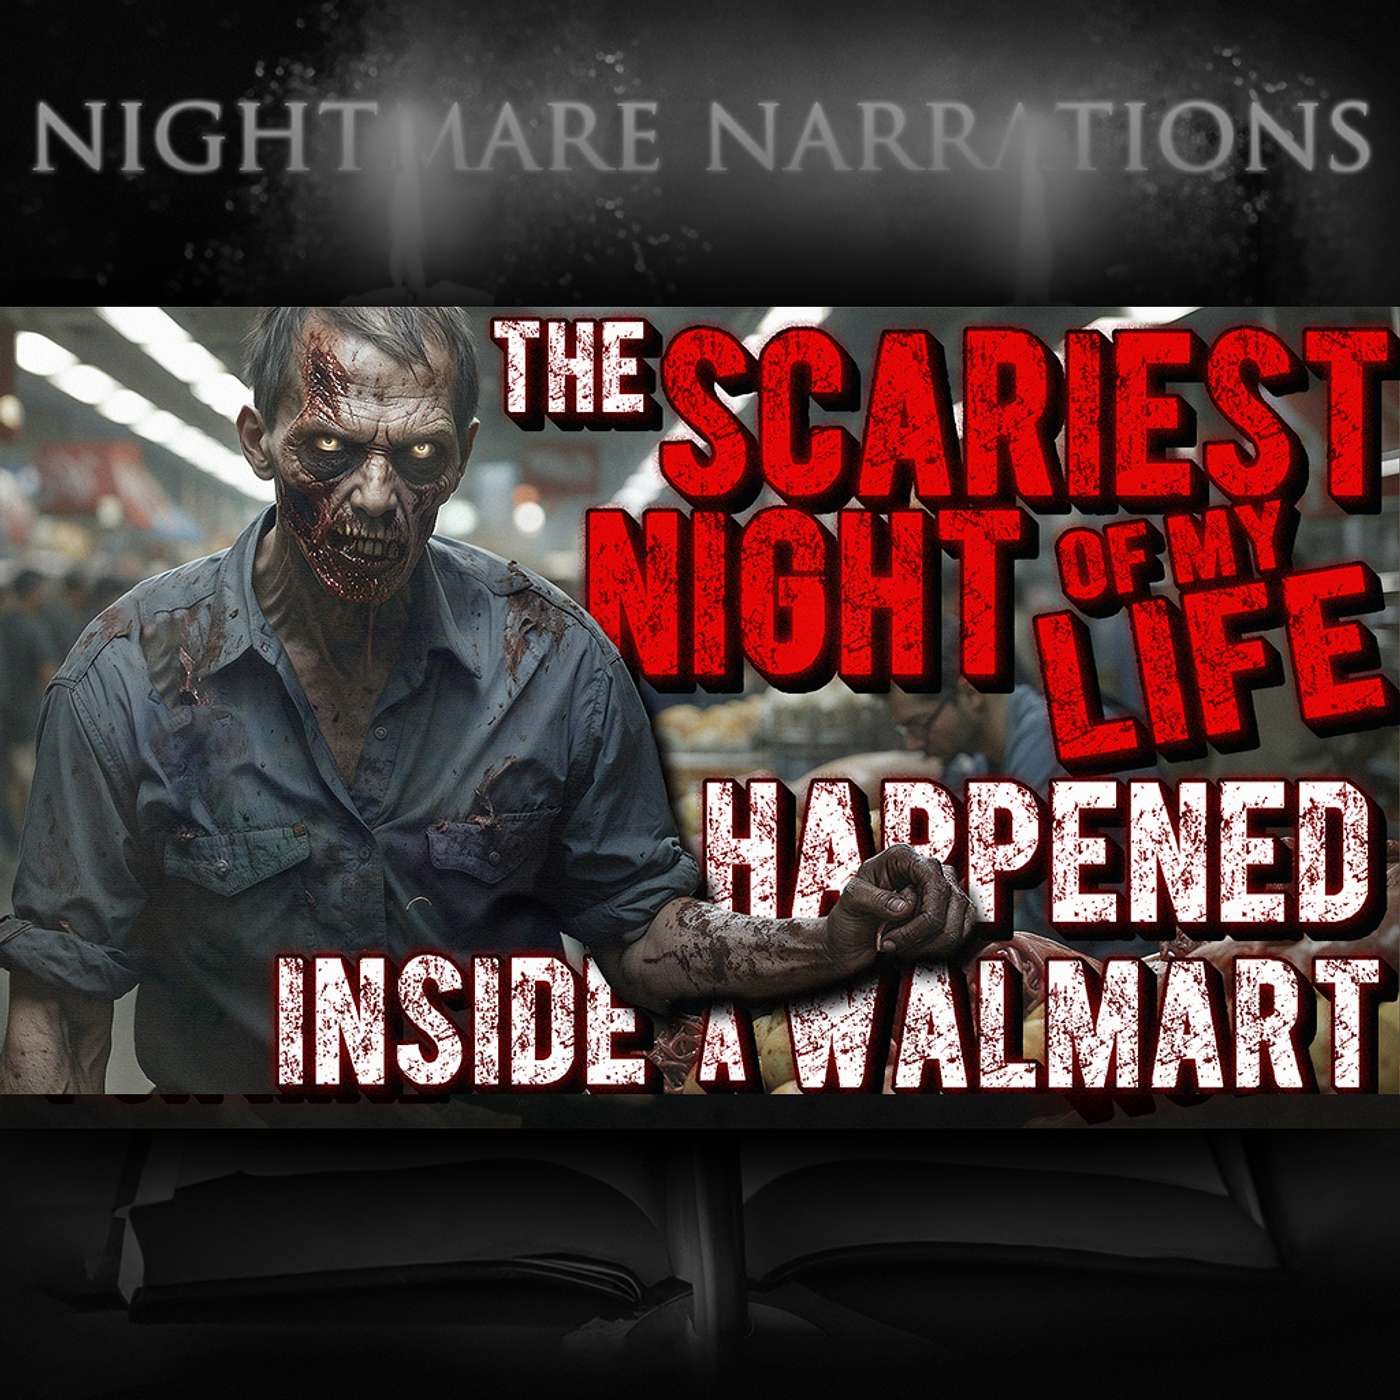 Warning: The Scariest Night of My Life Happened Inside a Walmart - Reddit Creepypasta Story